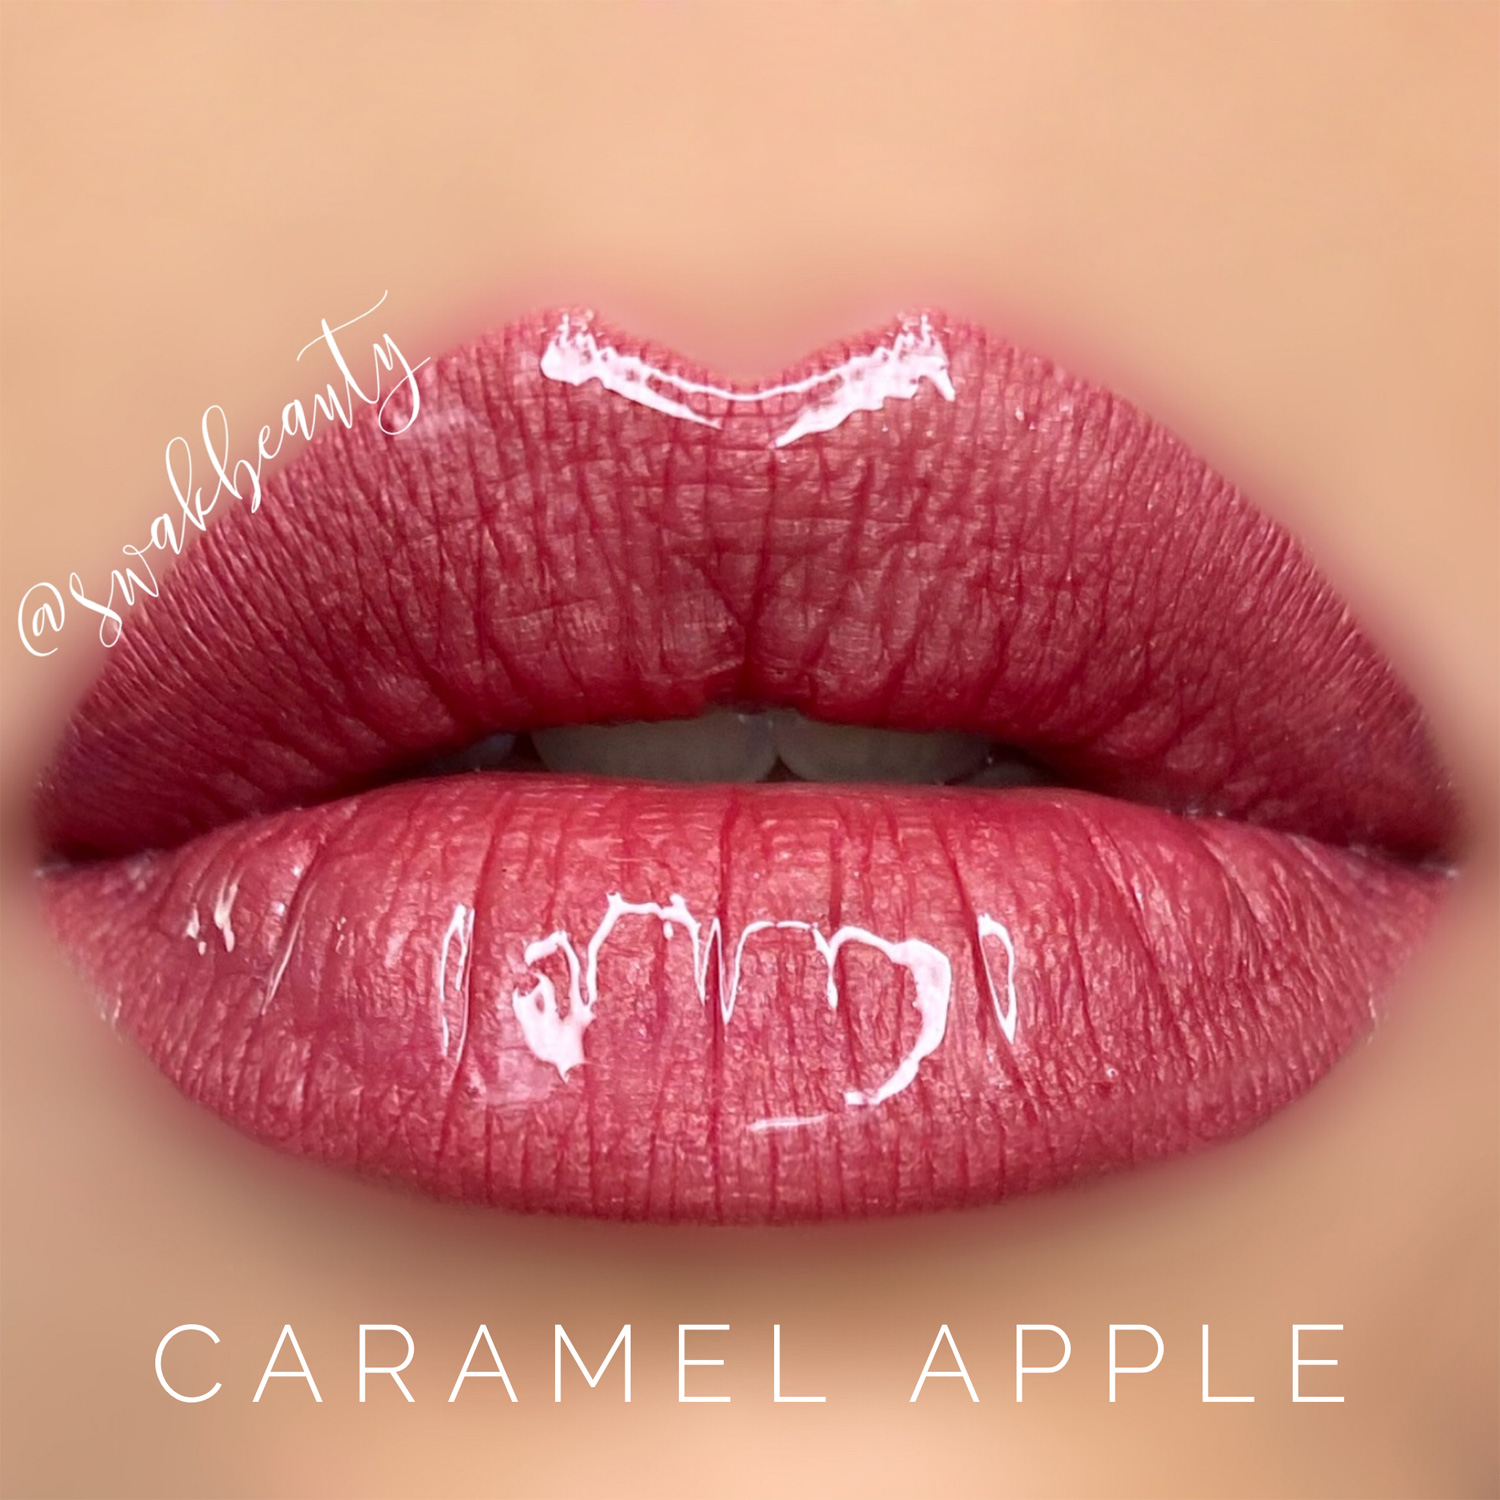 Caramel Apple LipSense New item